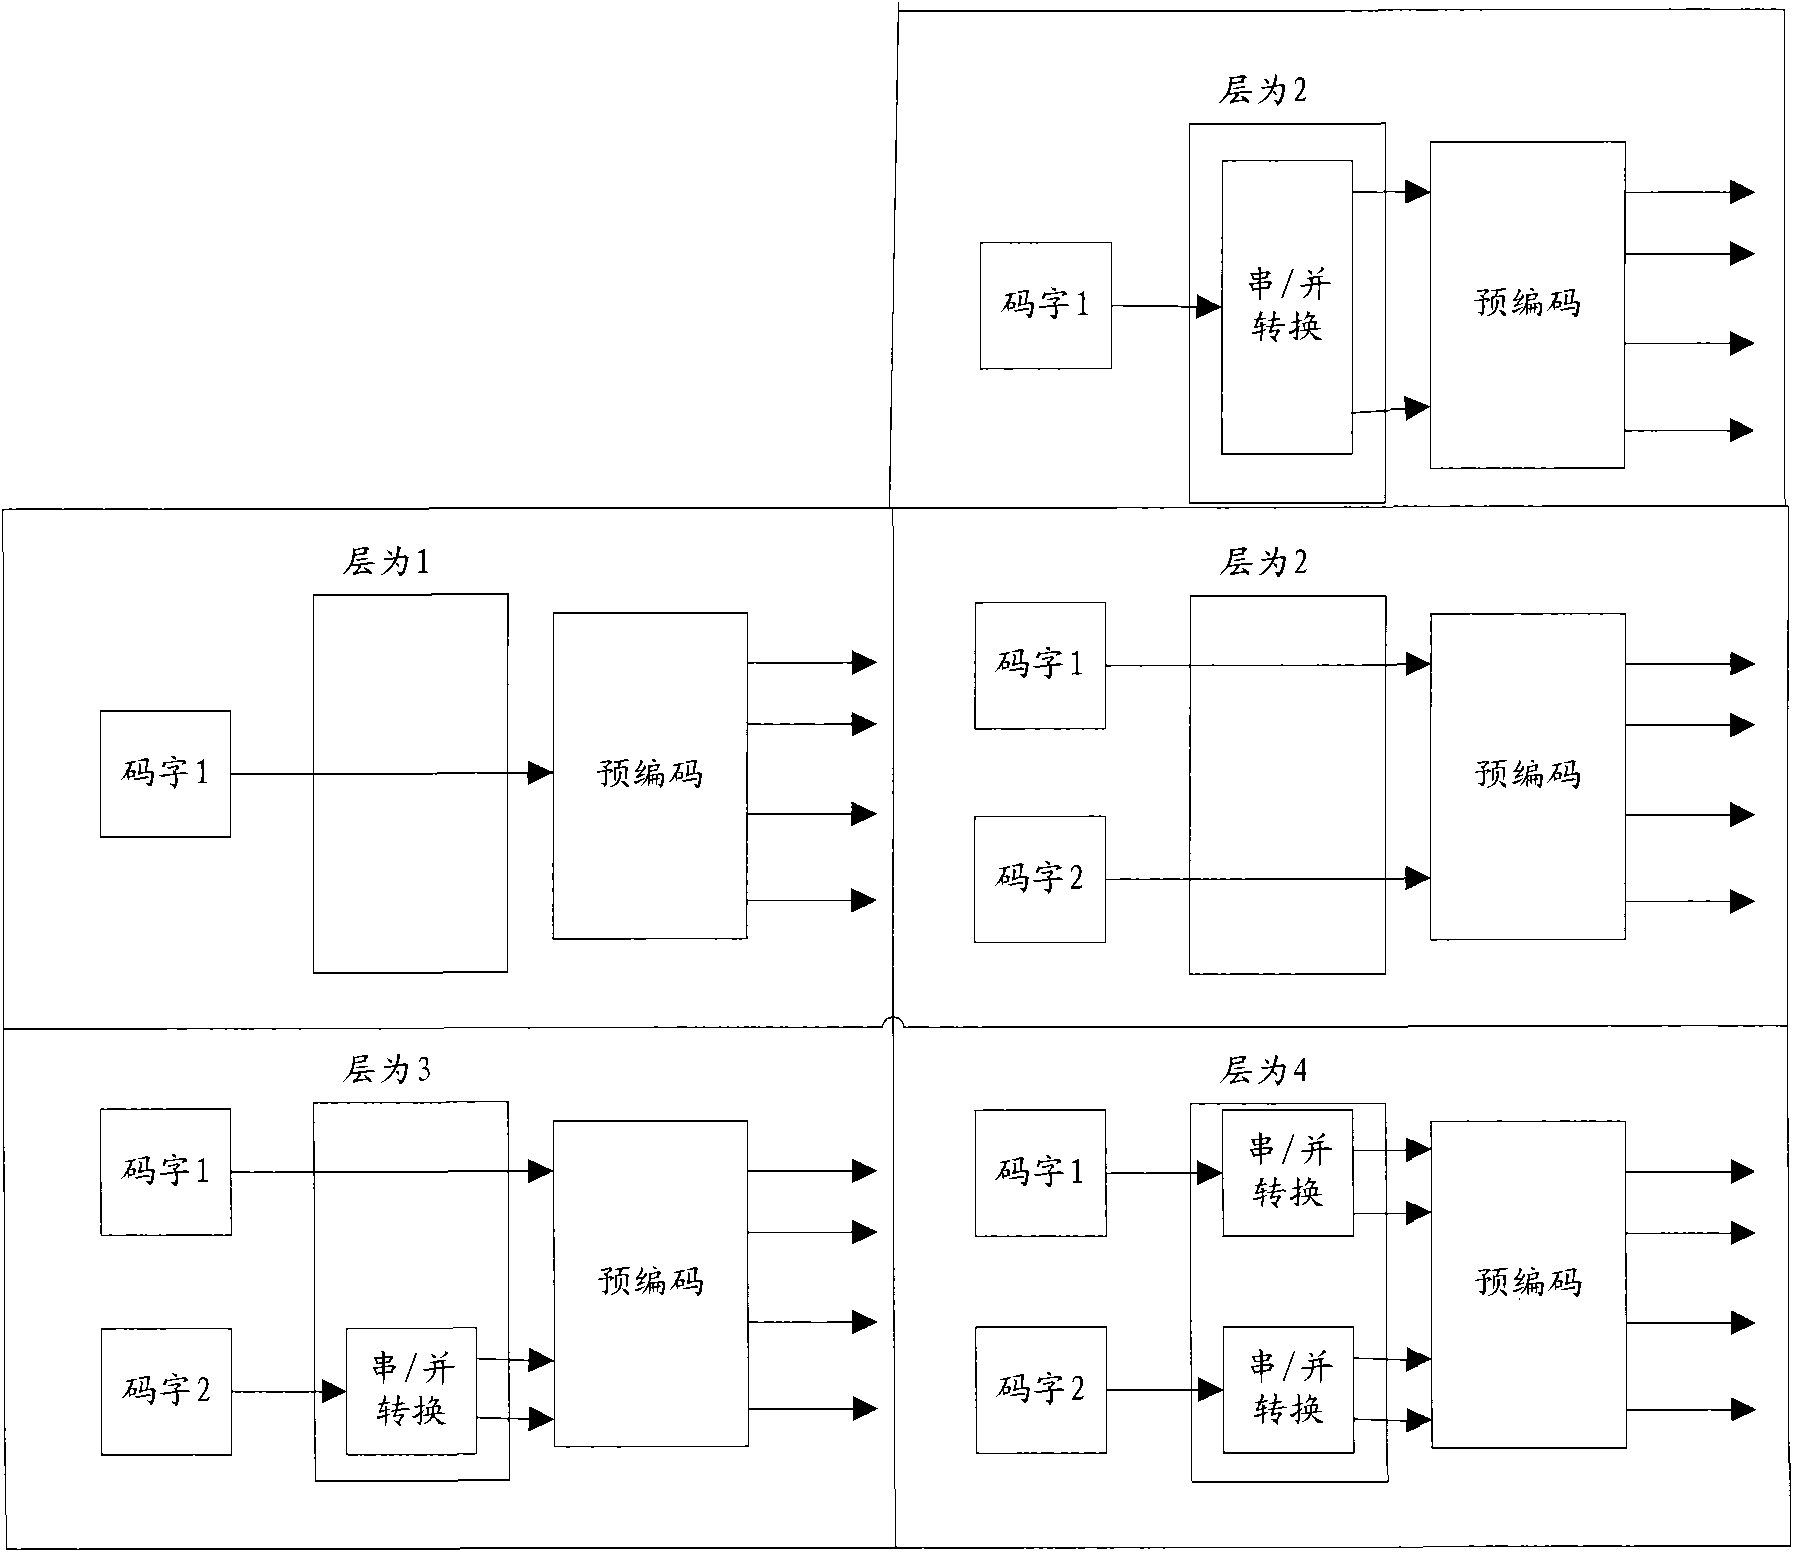 Method and system for indicating uplink demodulation reference signal